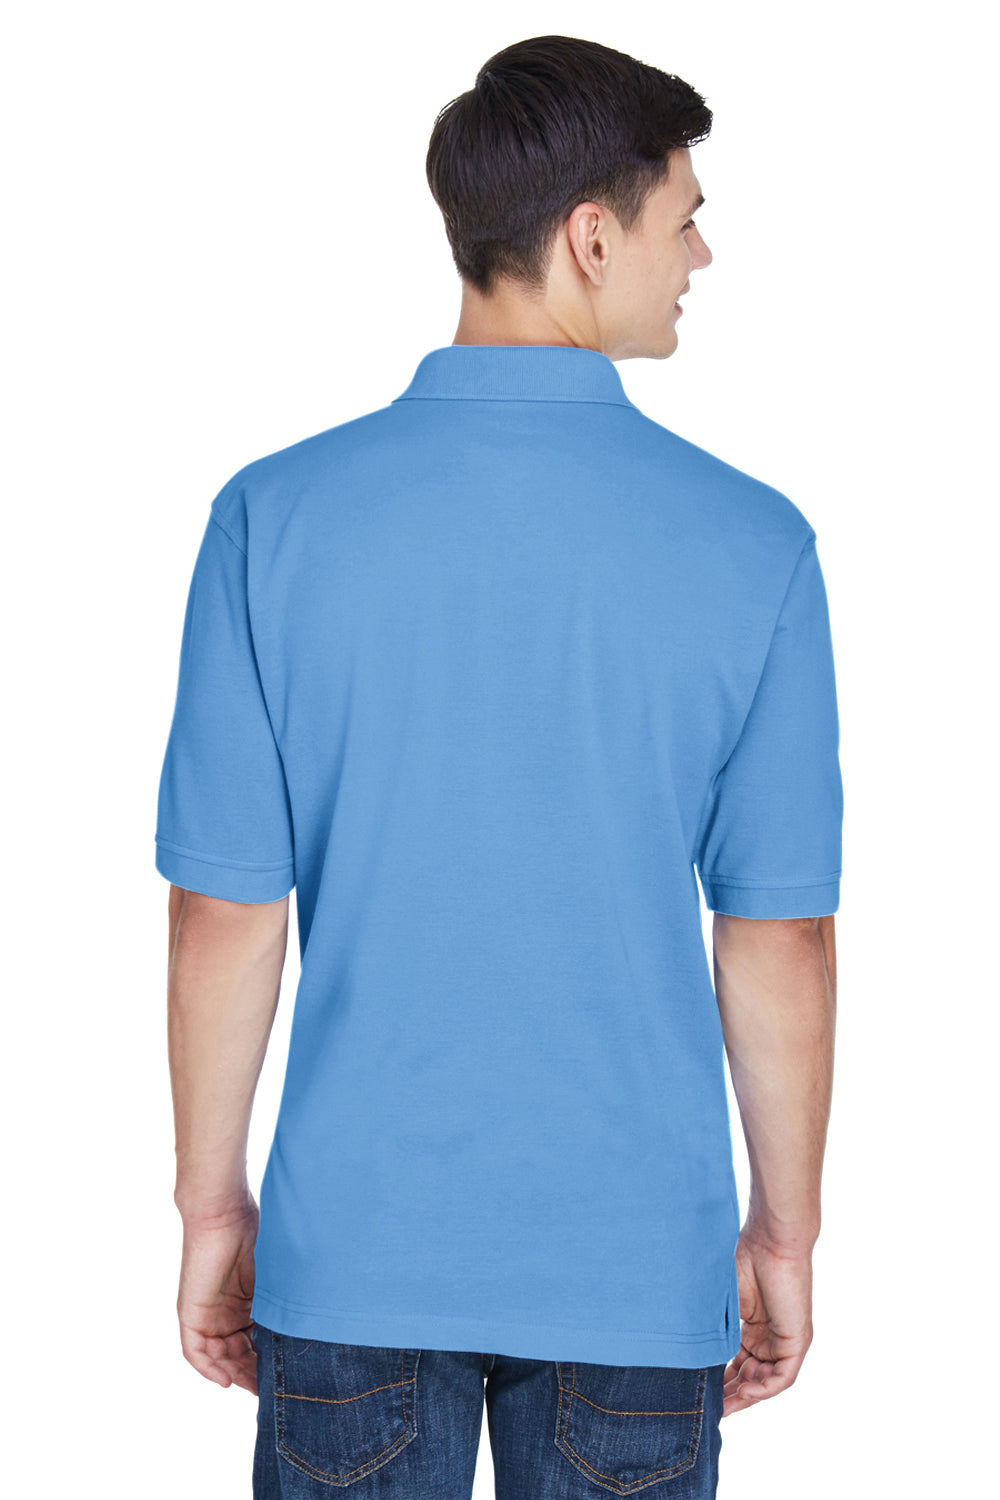 Harriton M265 Mens Easy Blend Wrinkle Resistant Short Sleeve Polo Shirt Light College Blue Back